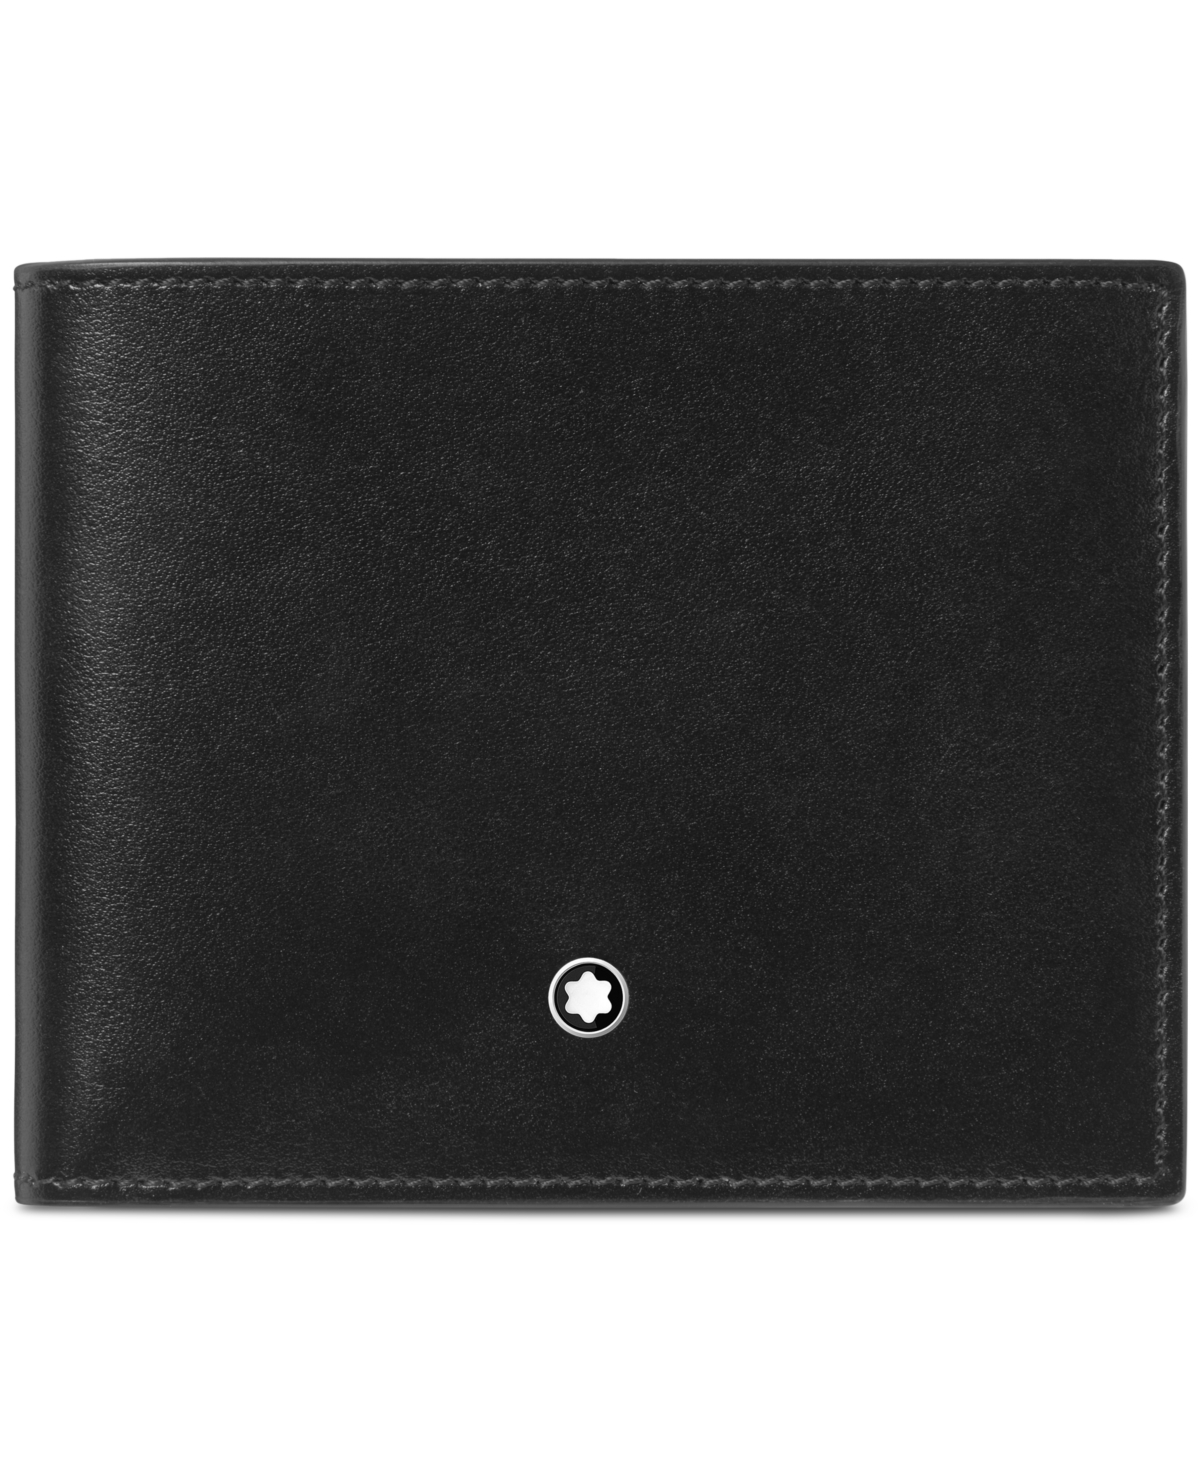 Meisterstuck Leather Wallet - Black